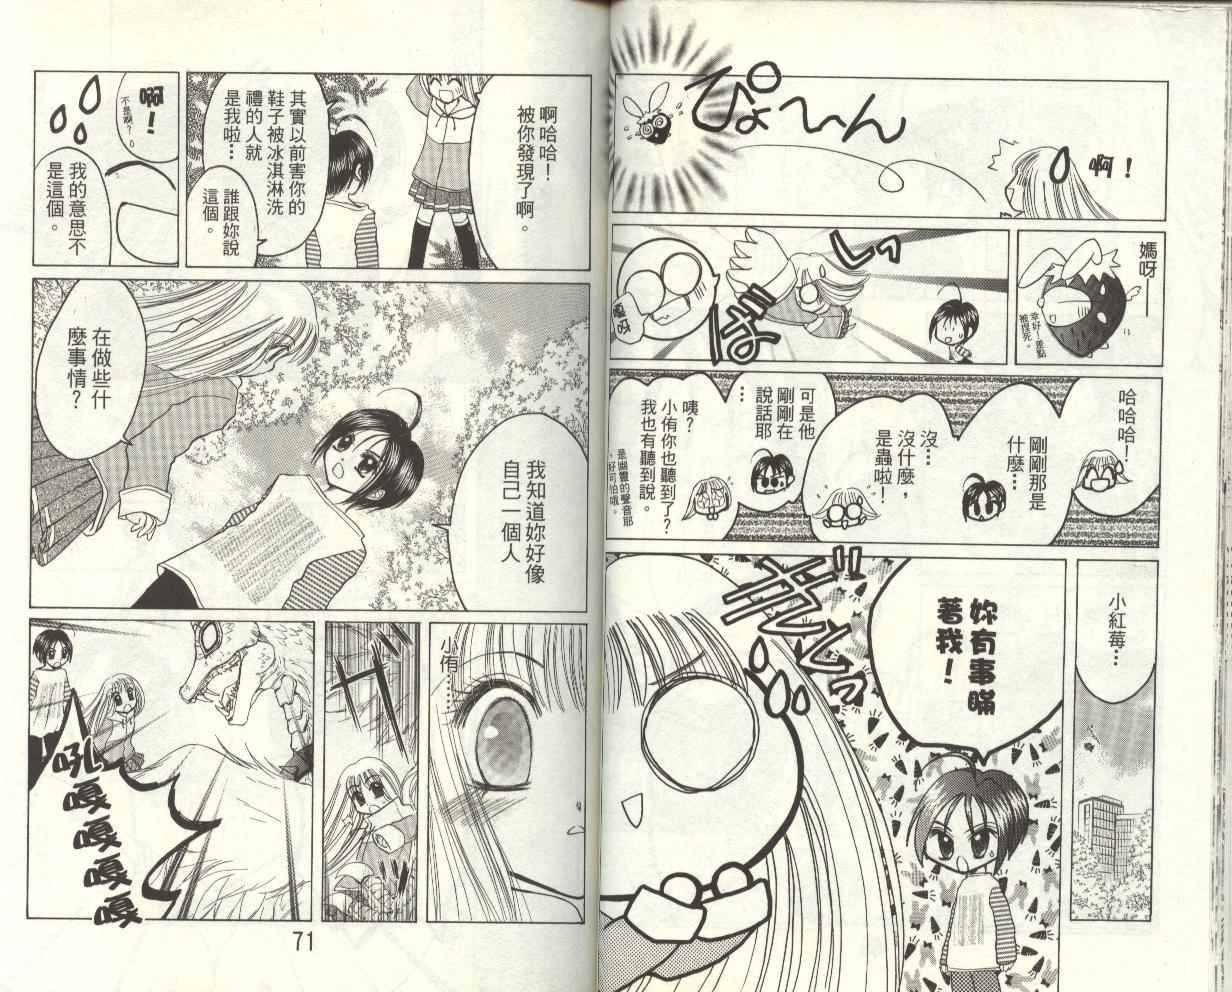 《东京MewMew》漫画 PartII 01卷